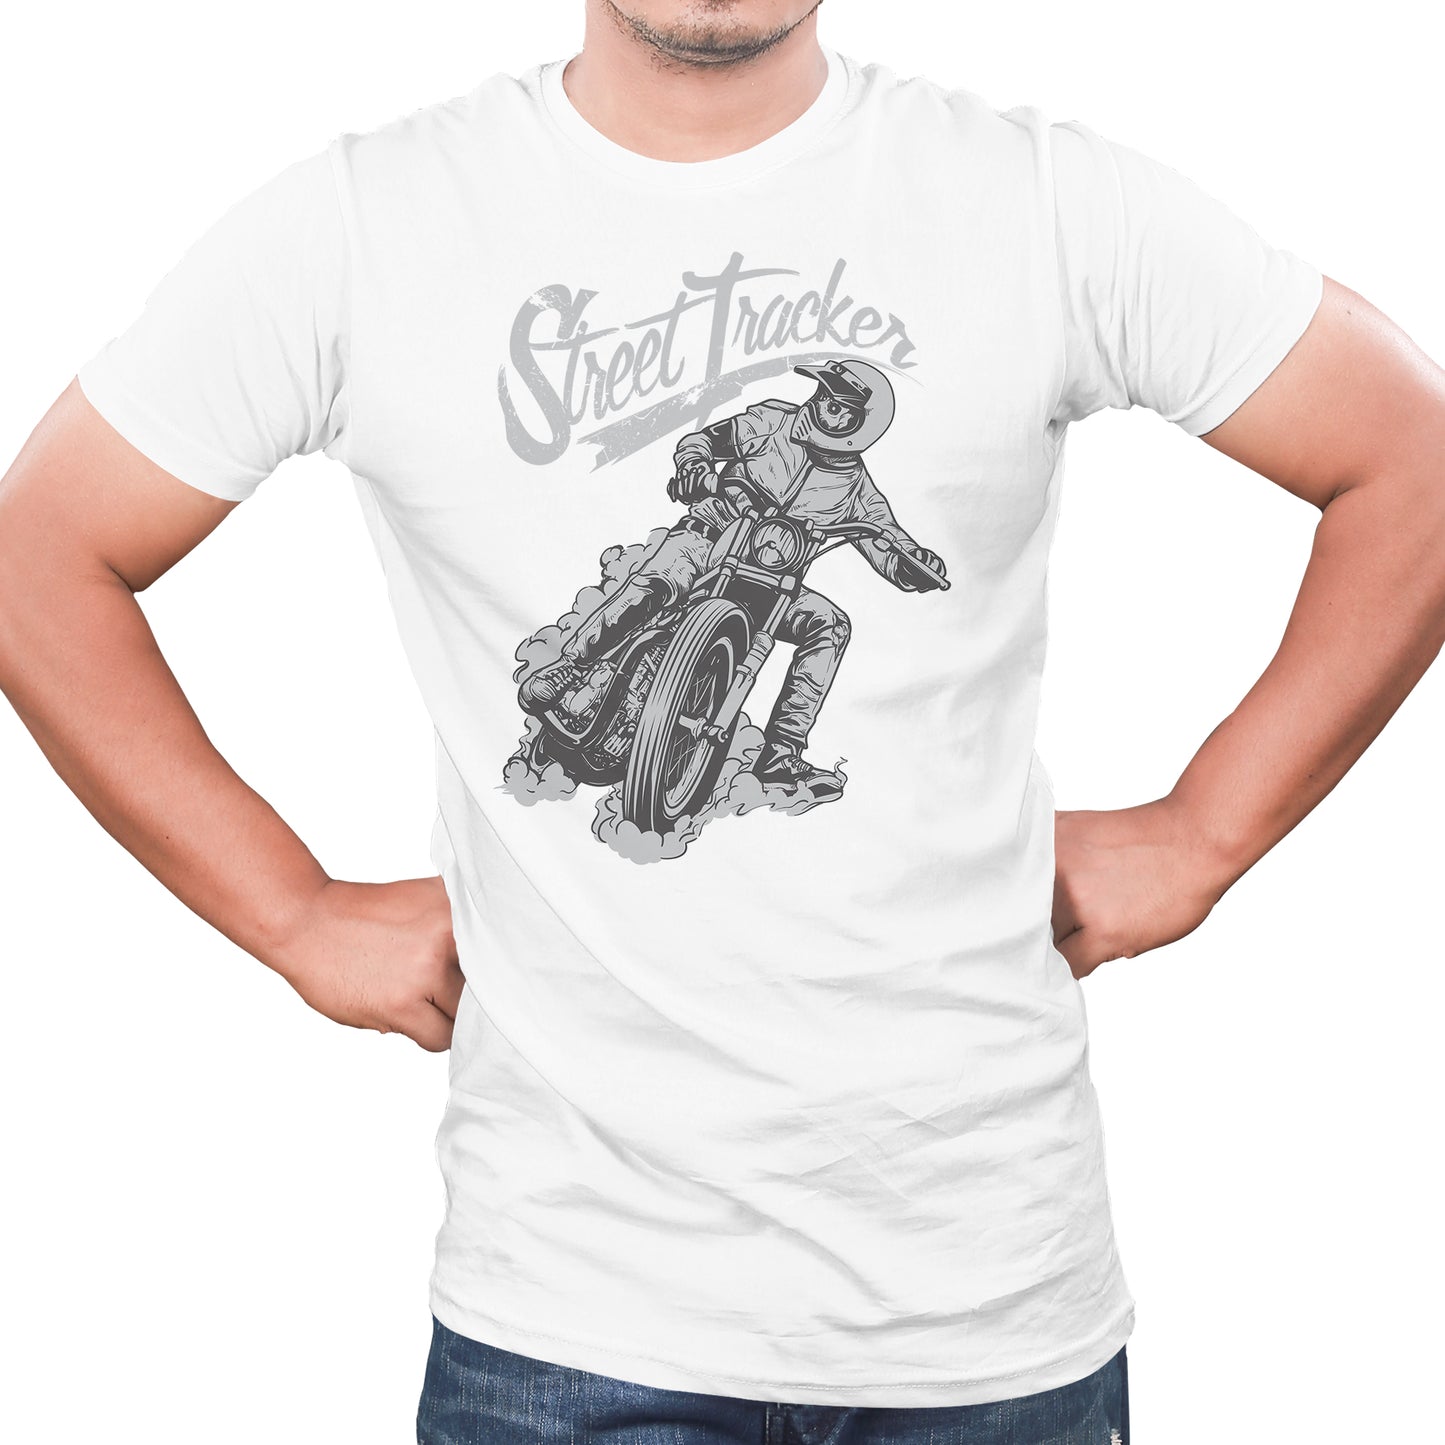 Street Rider quote Biker t shirts -White